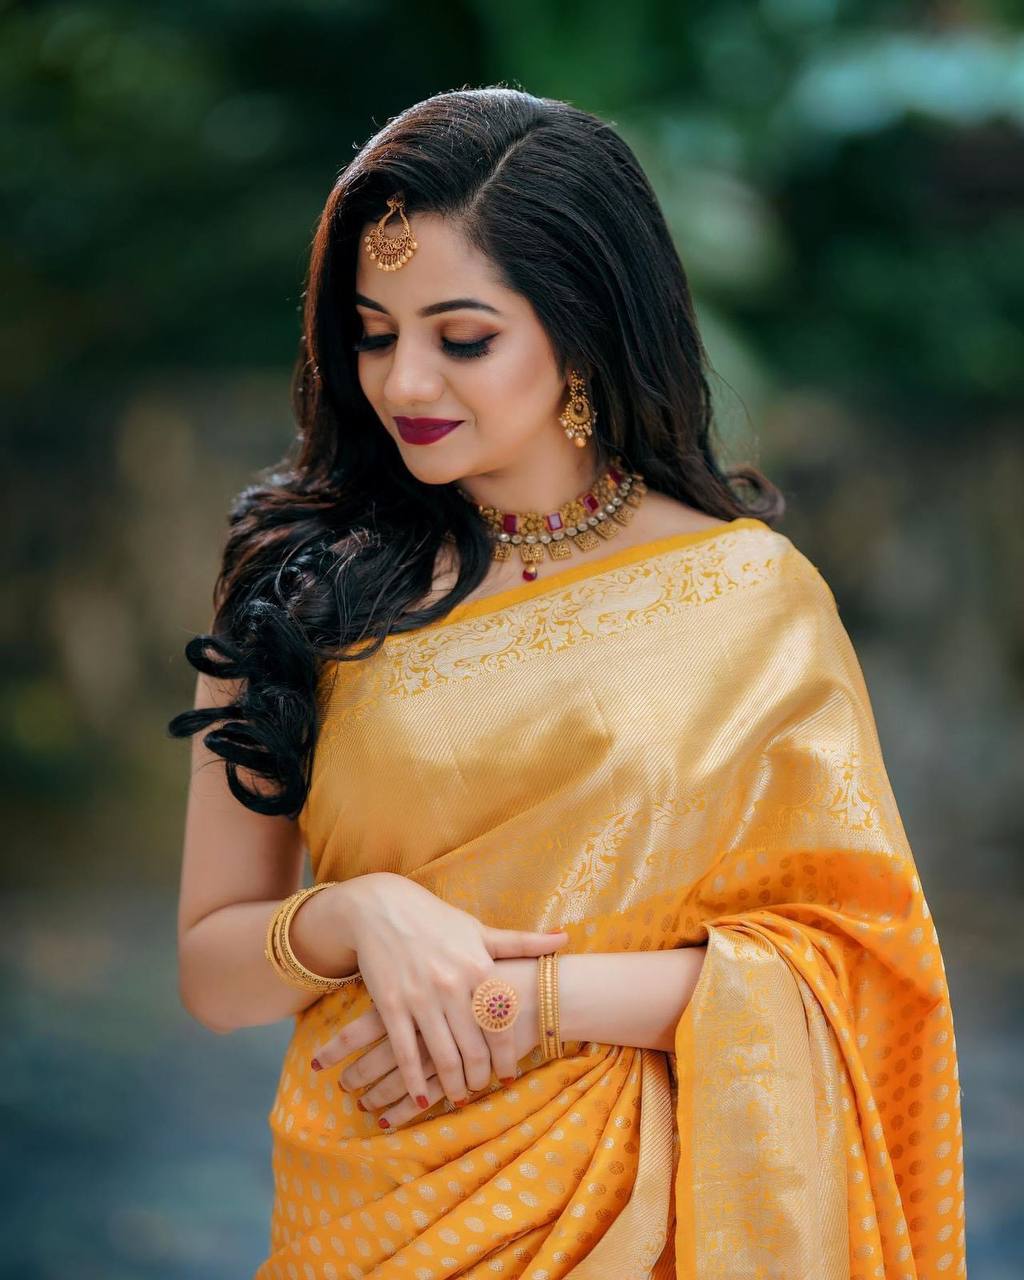 Royal Yellow Banarasi Beautiful Zari Work In Form Of Traditional Motifs Soft Silk Saree